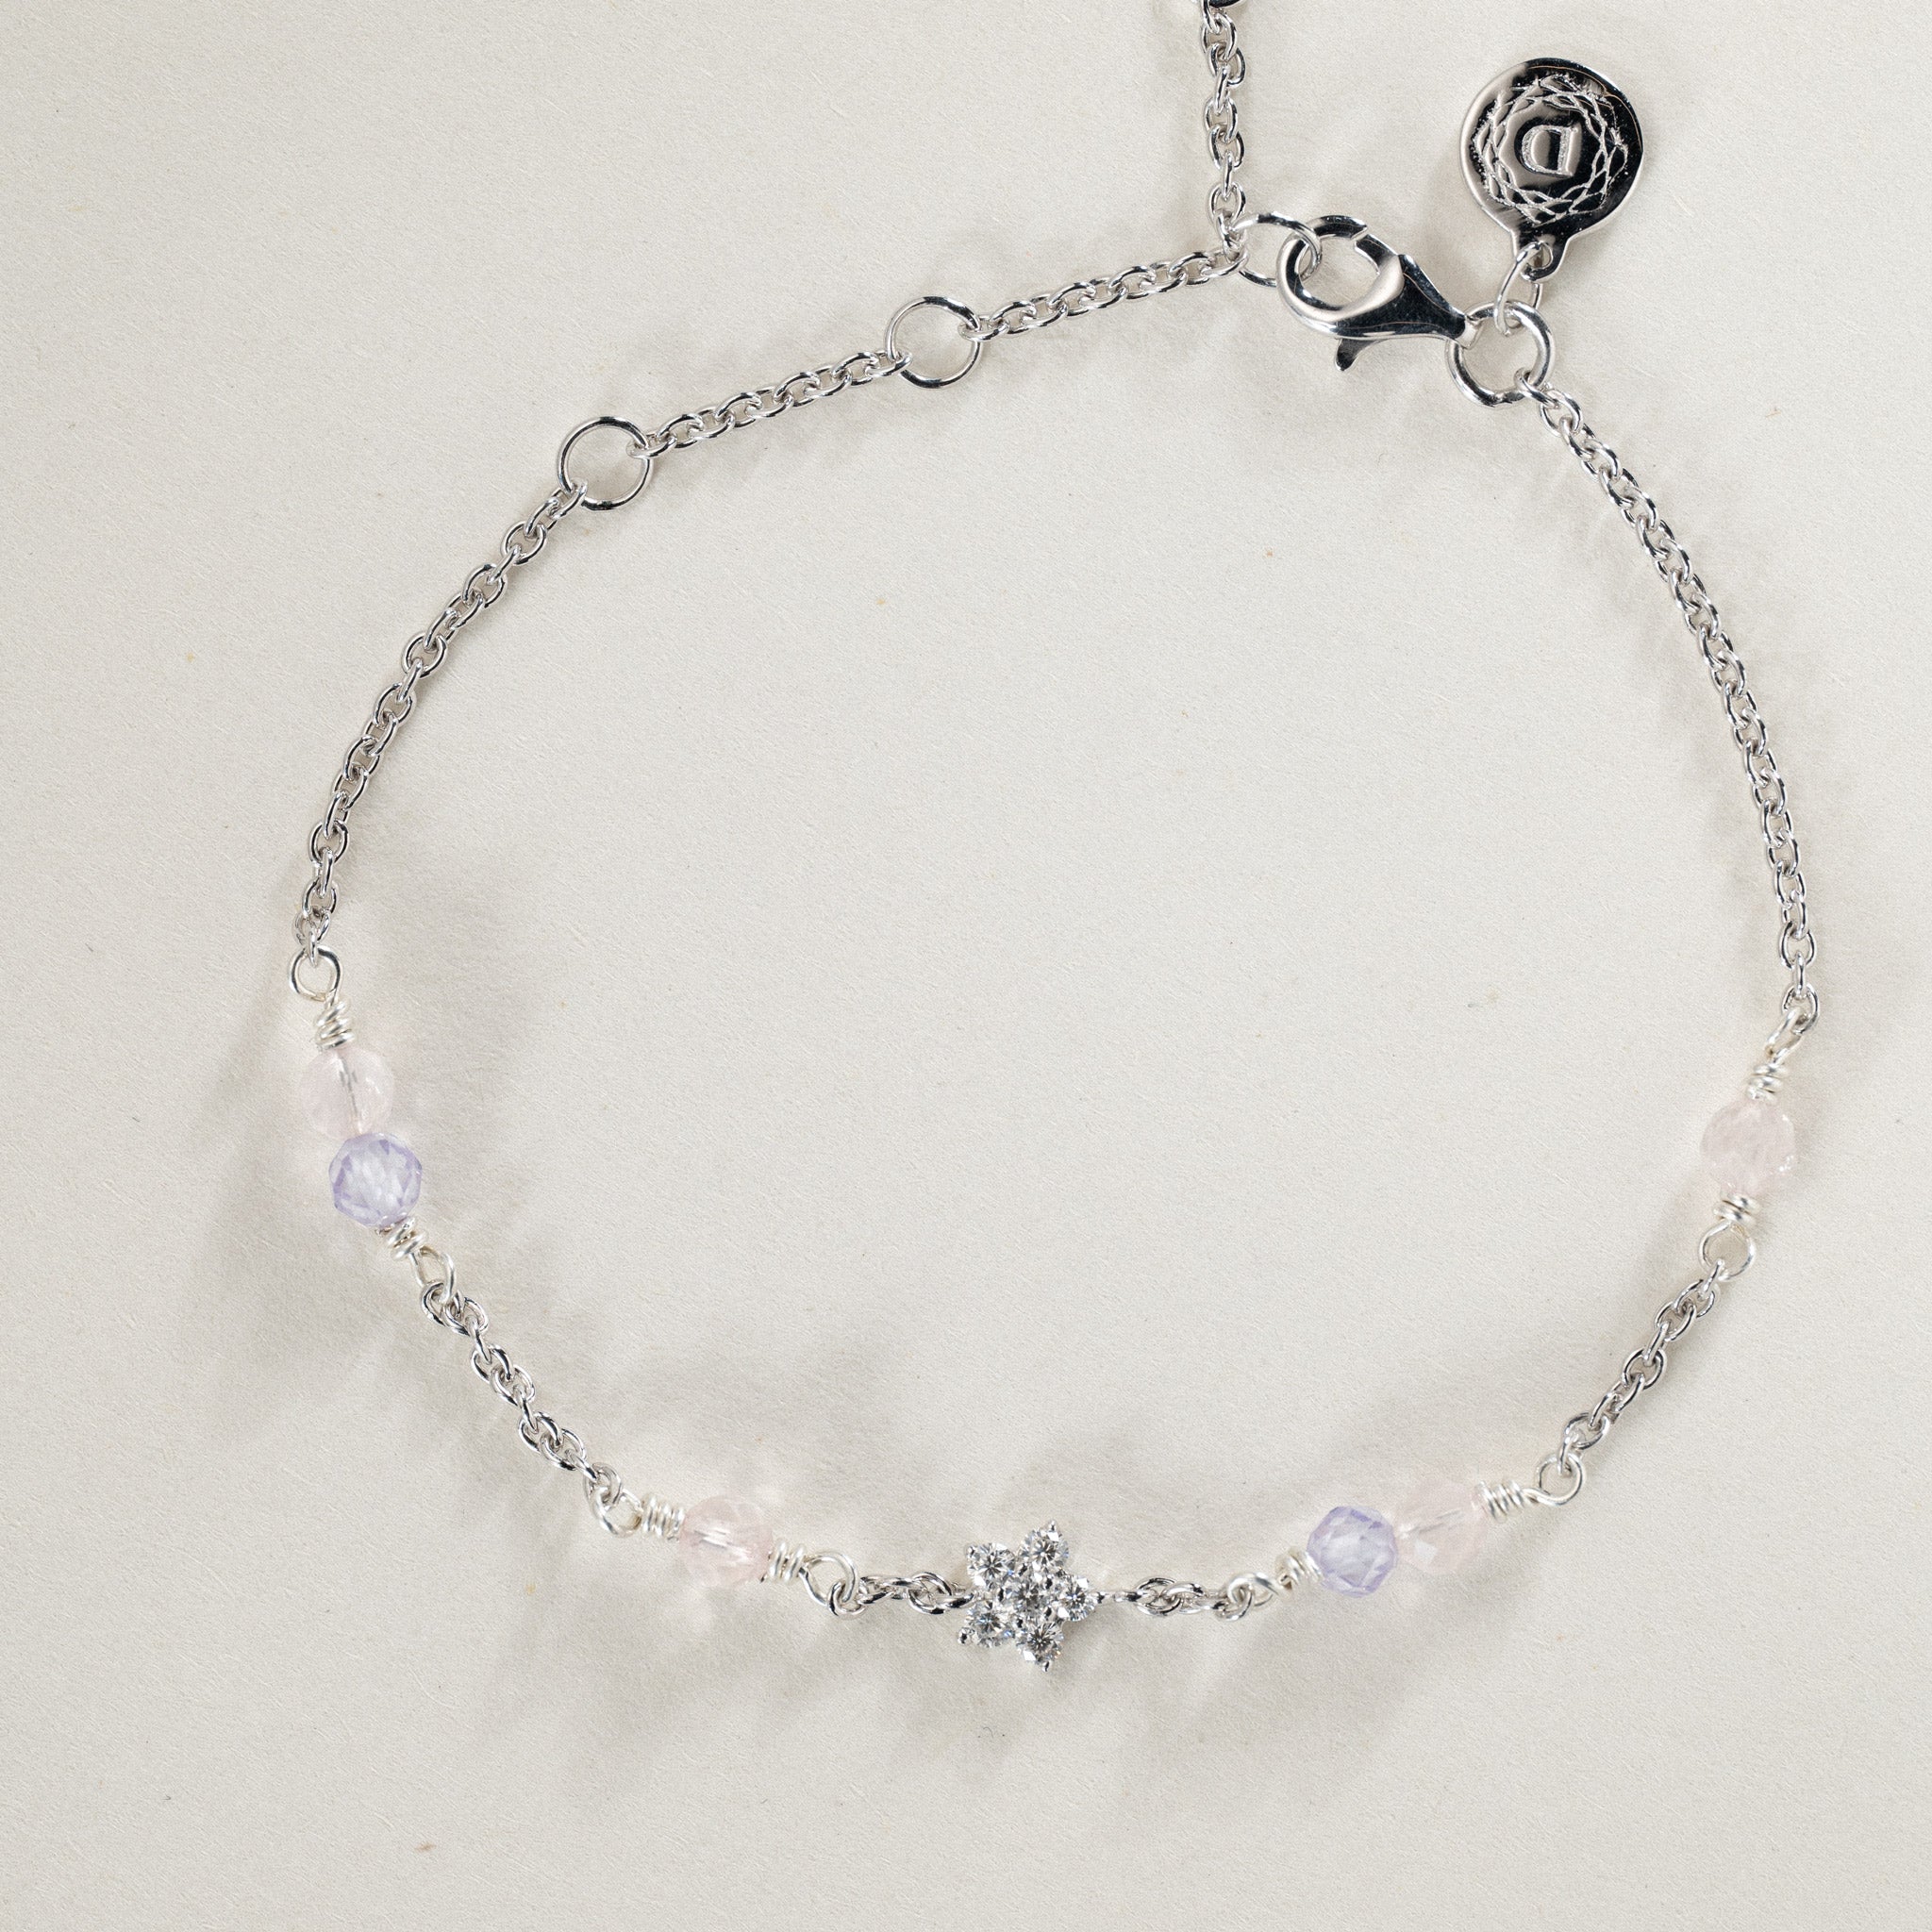 No. 03 - 0.12ct Grown Diamond Star bracelet in silver w. semi-precious stone